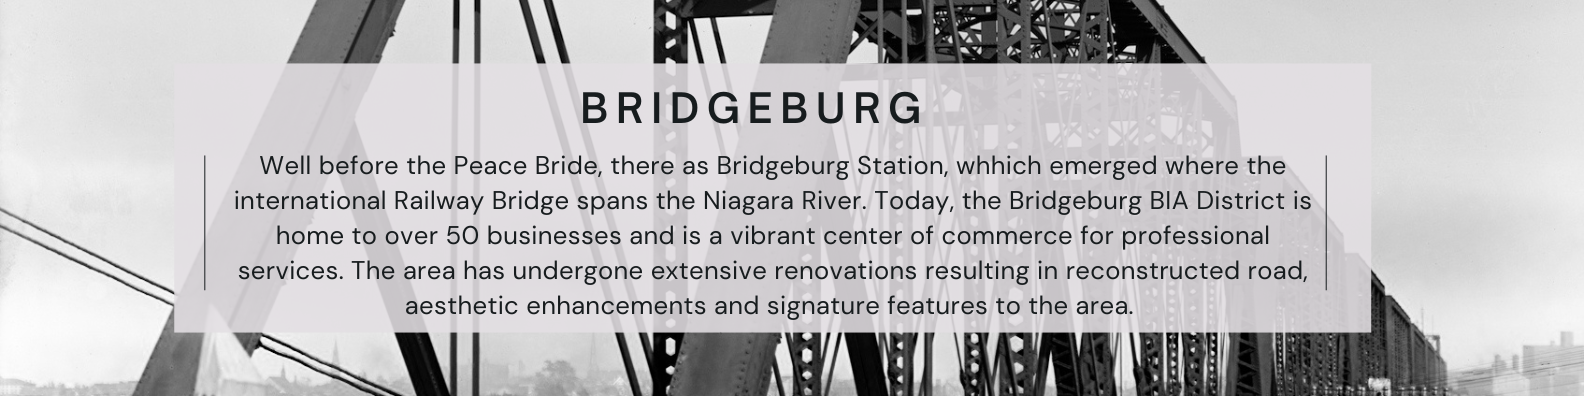 bridgeburg district description